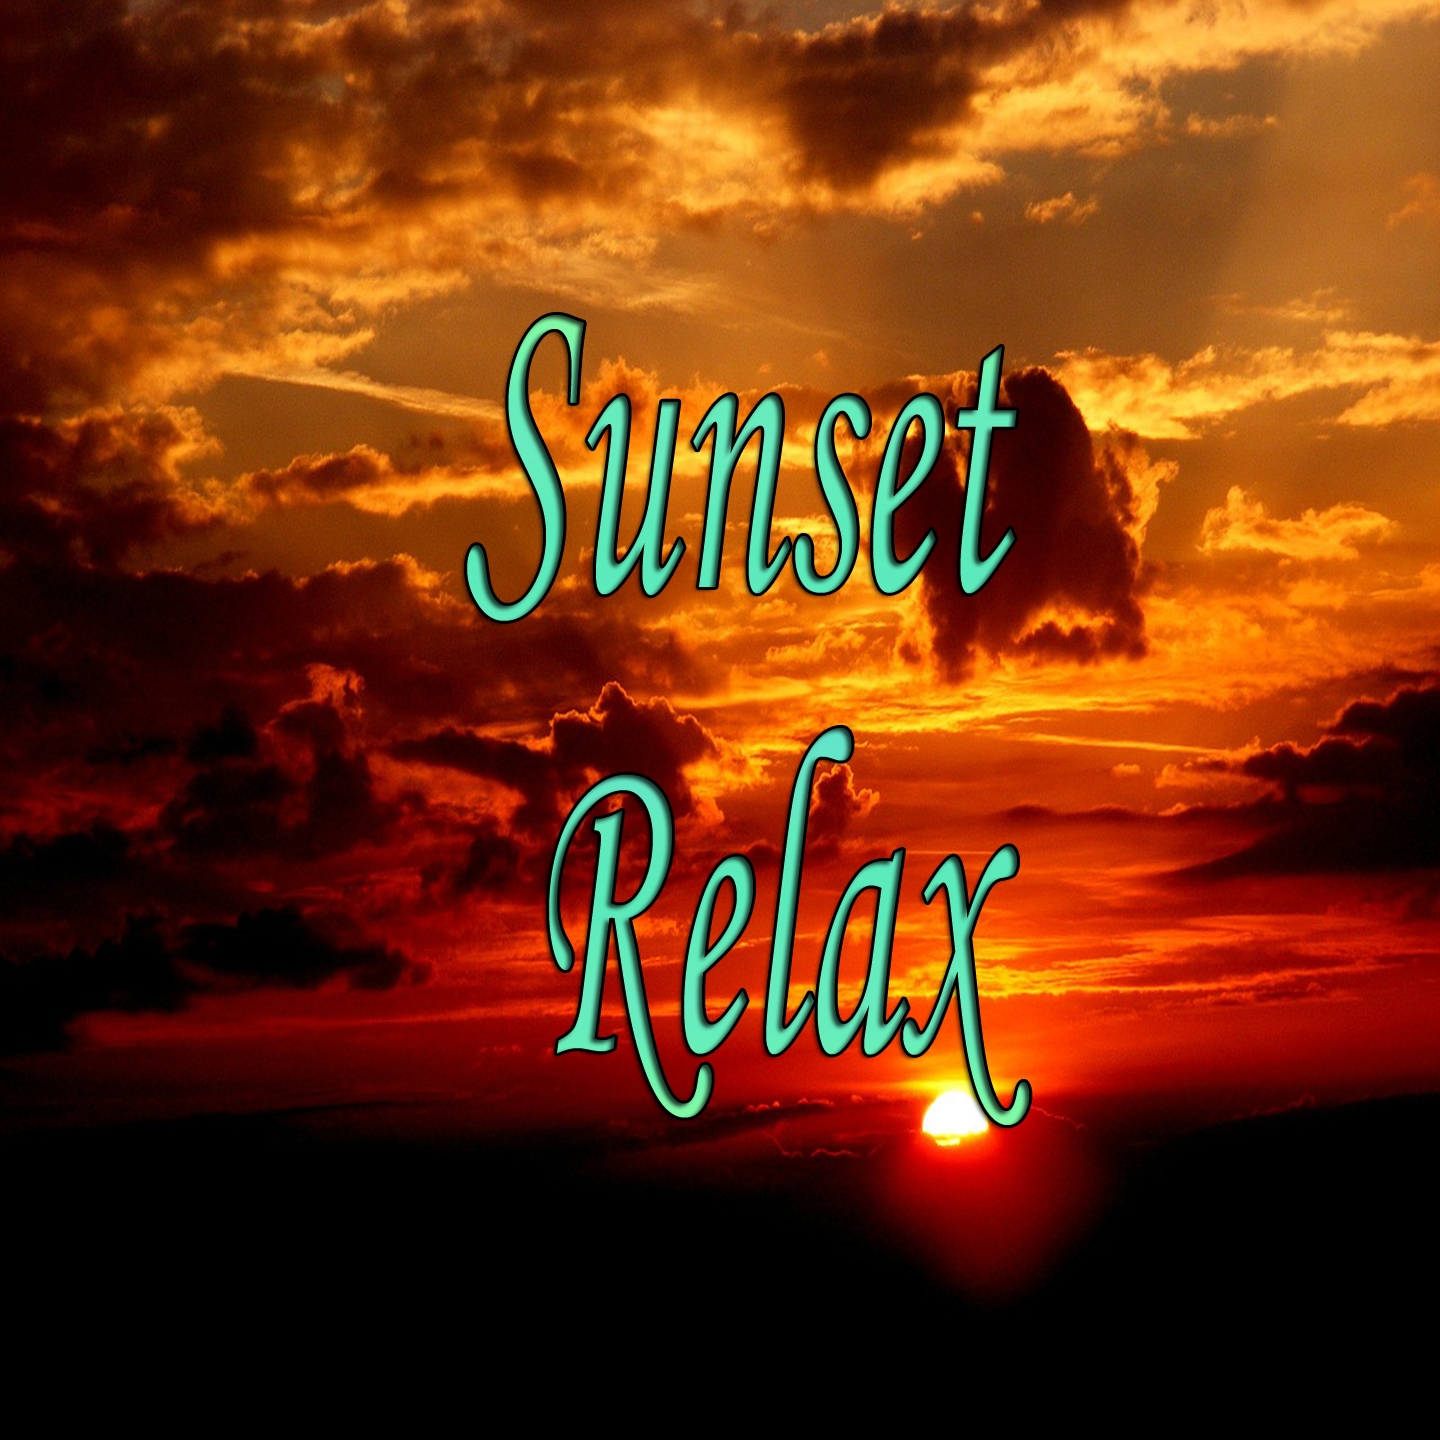 Sunset Relax